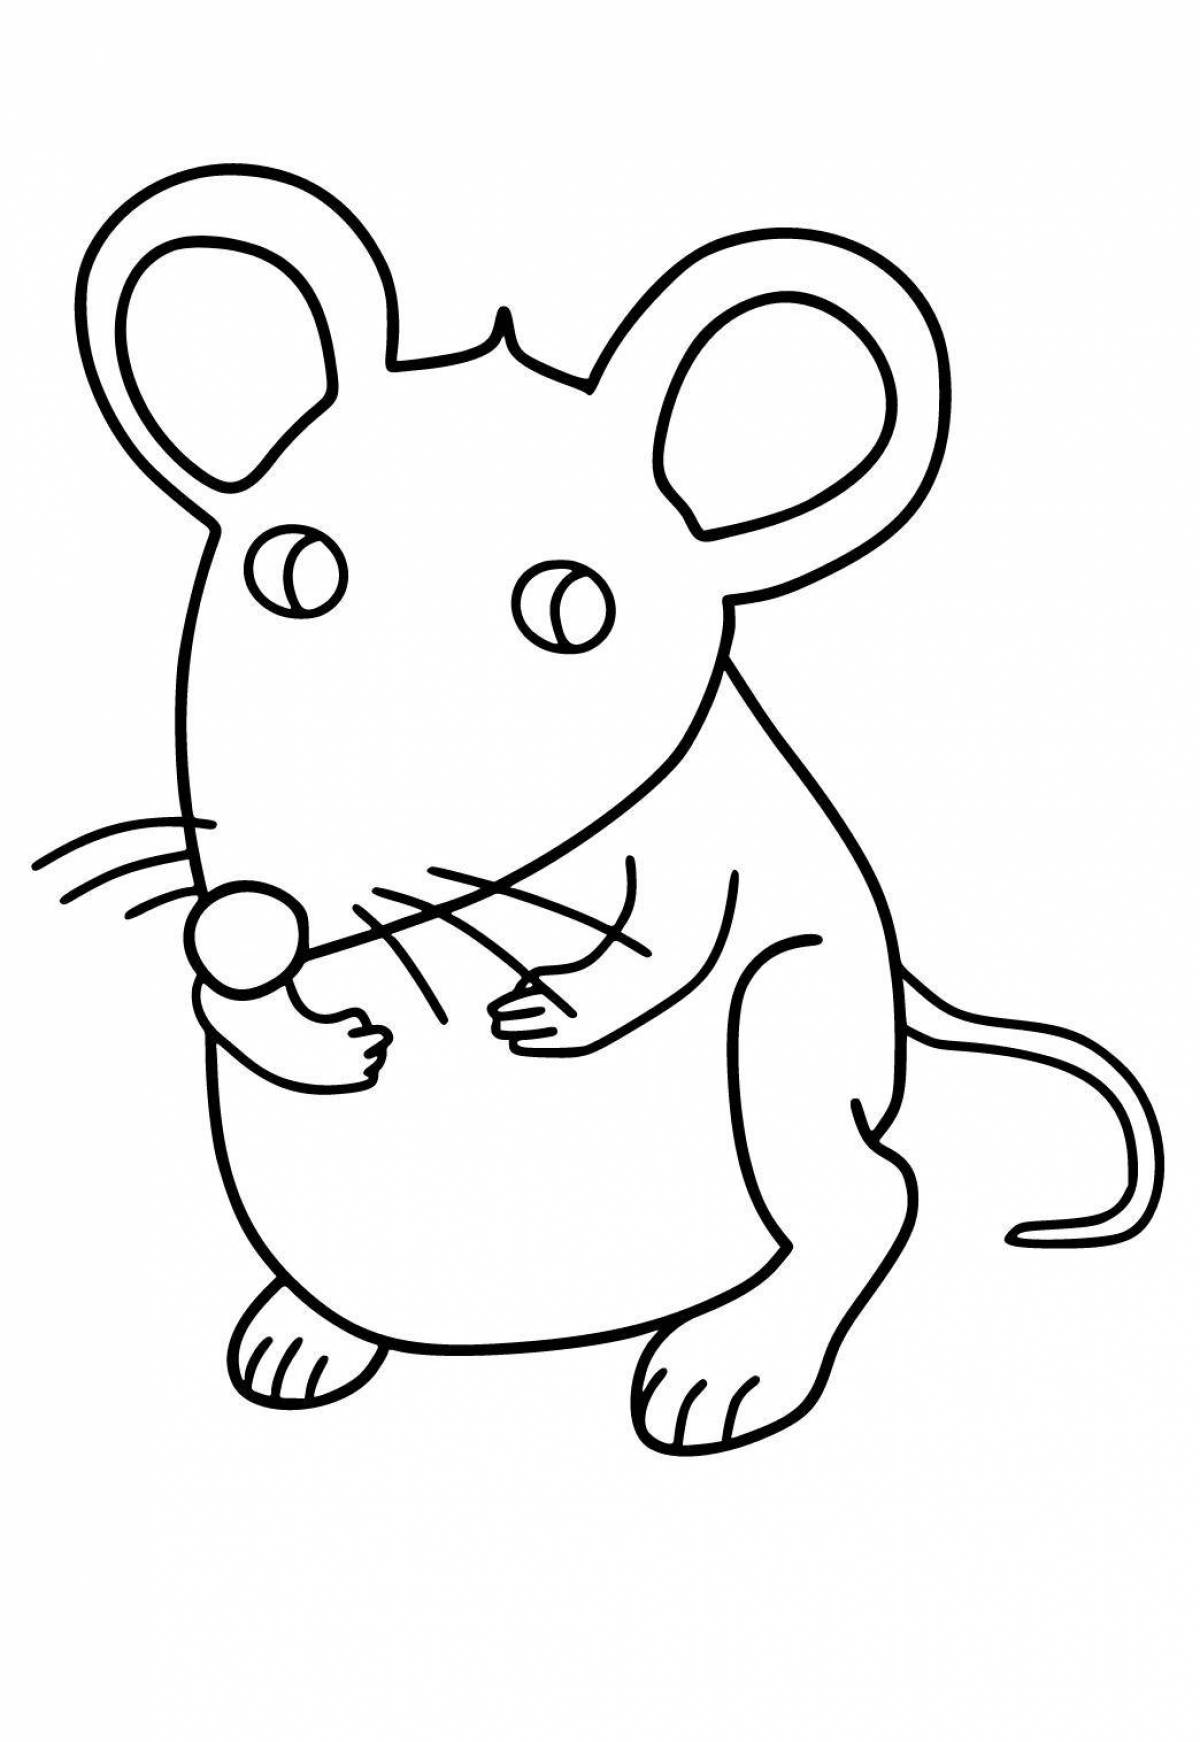 Fun coloring mouse norushka